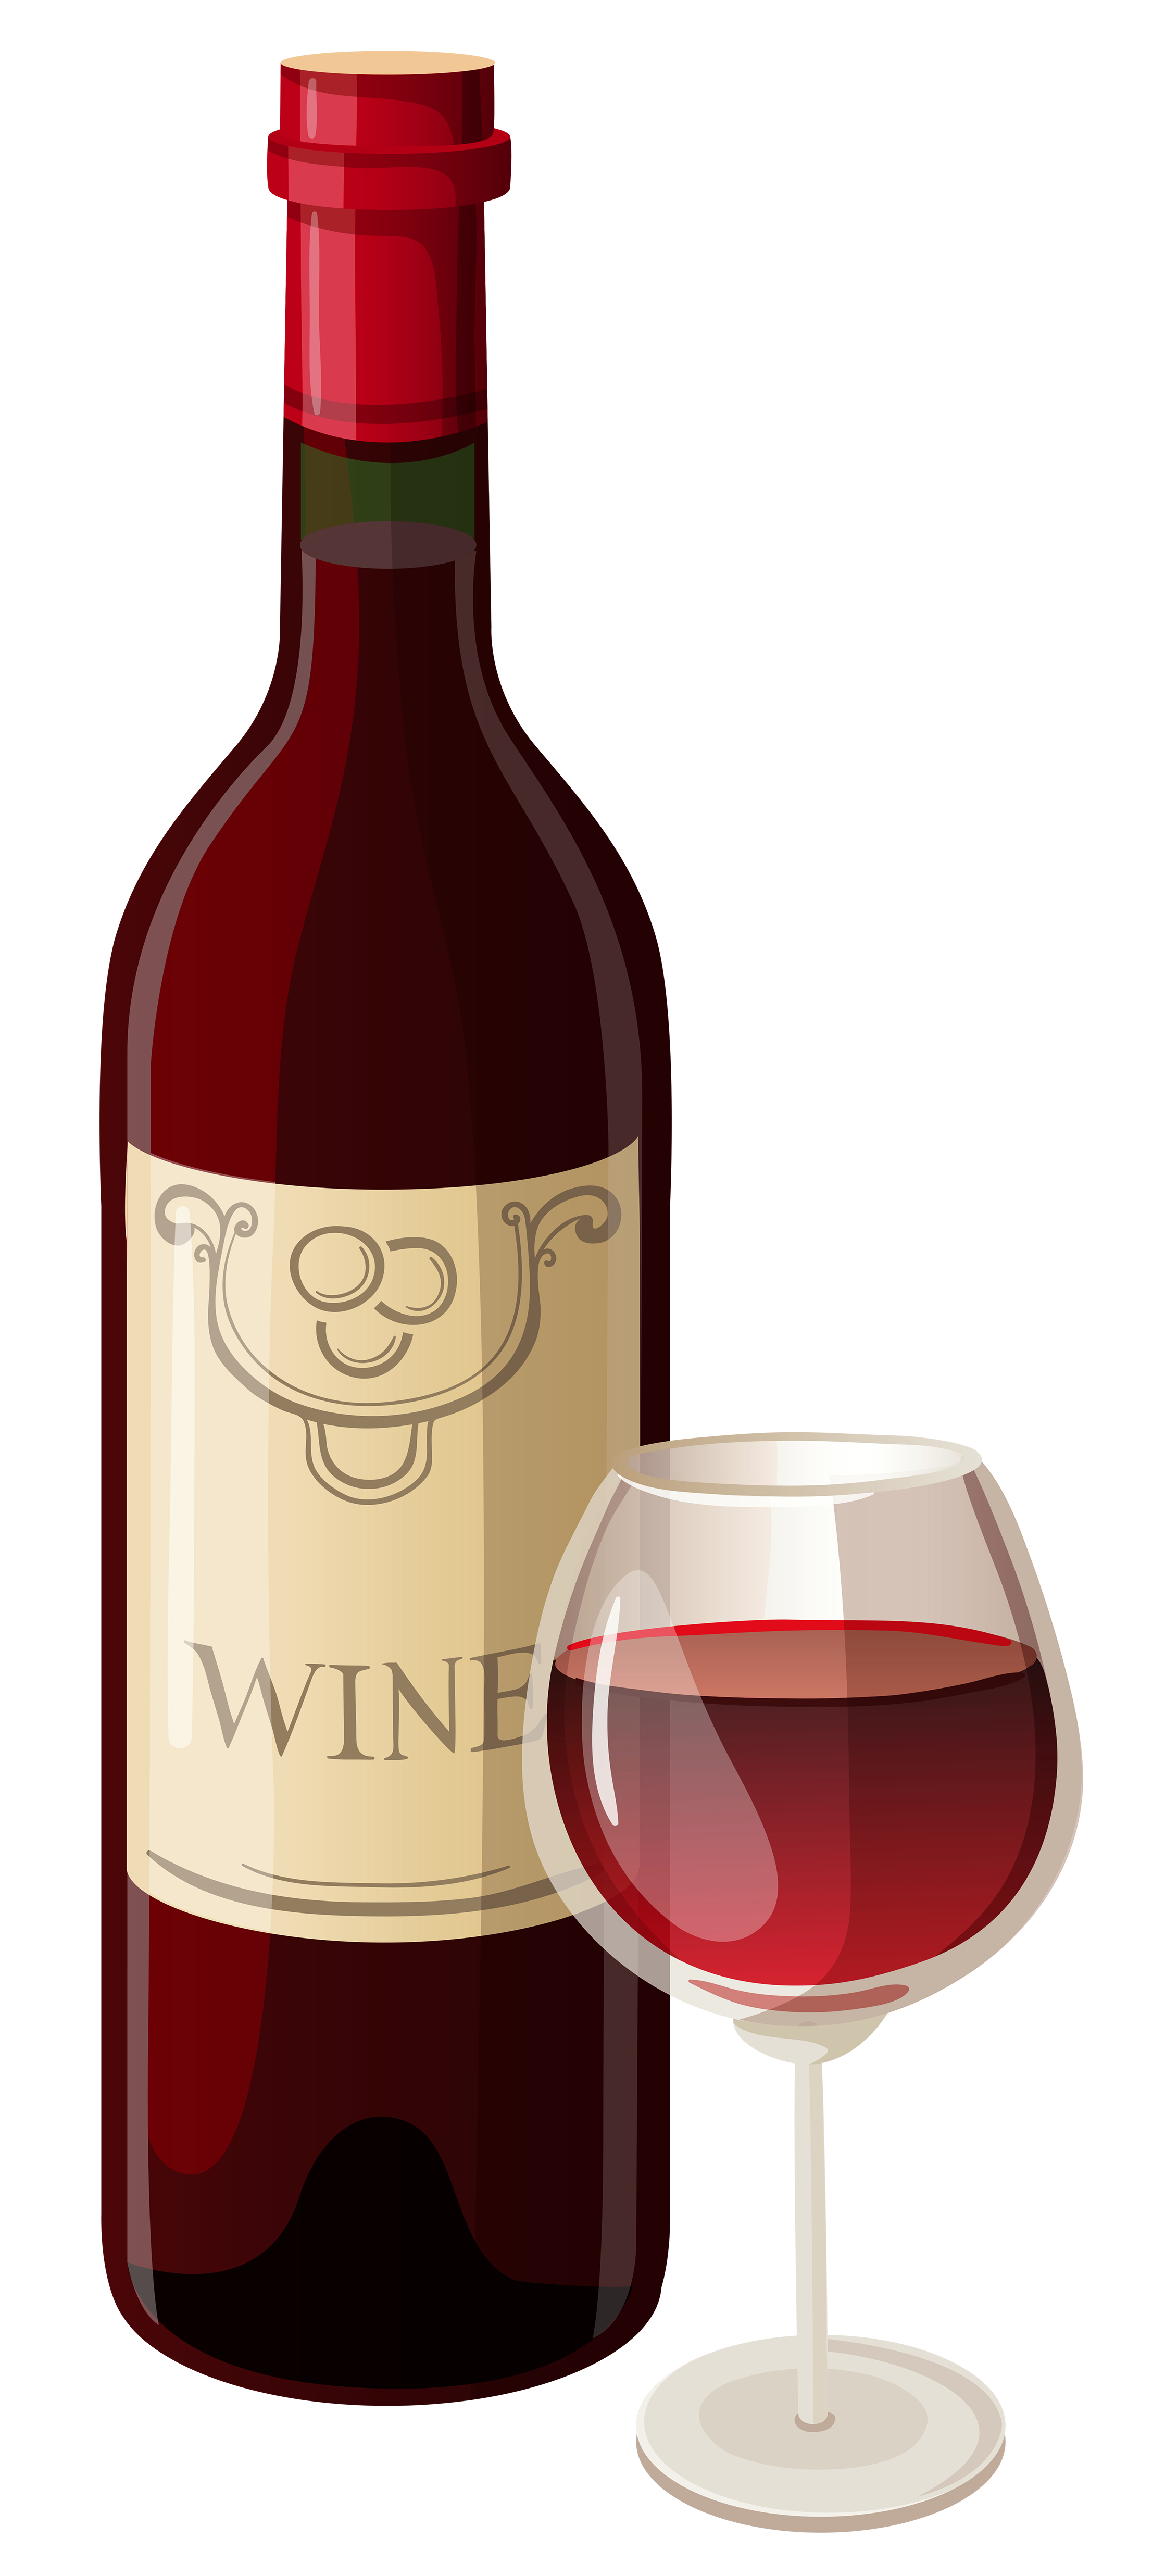 wine bottle clipart transparent png 10 free Cliparts | Download images